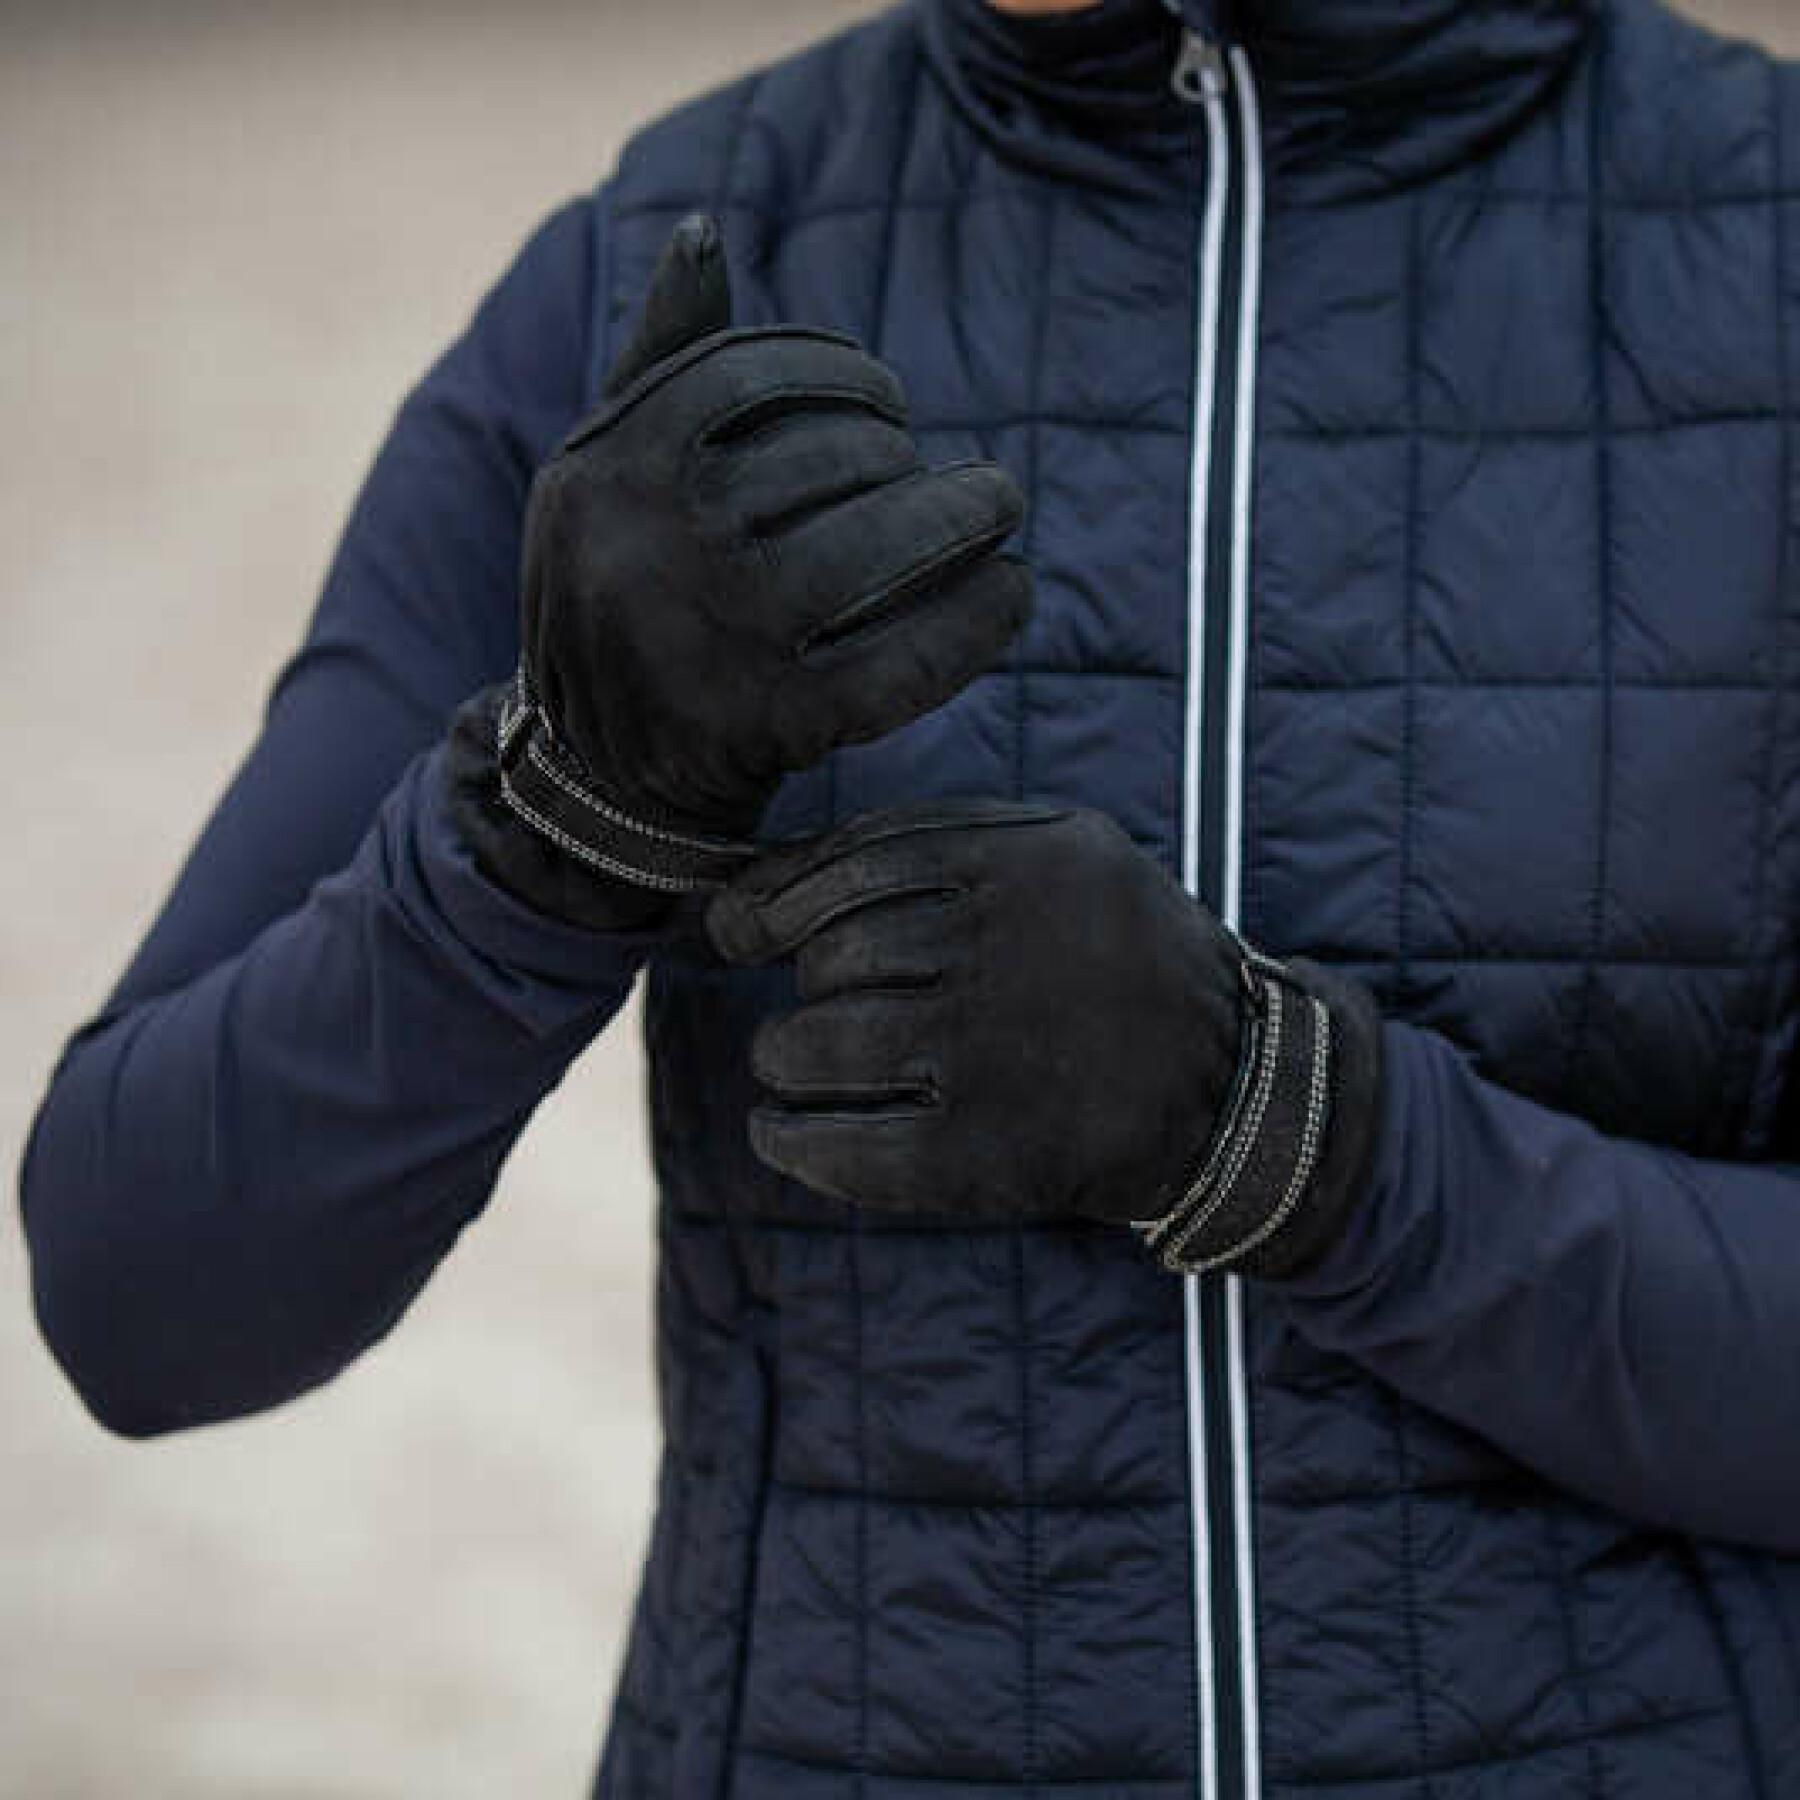 Thermal leather riding gloves B Vertigo Milan